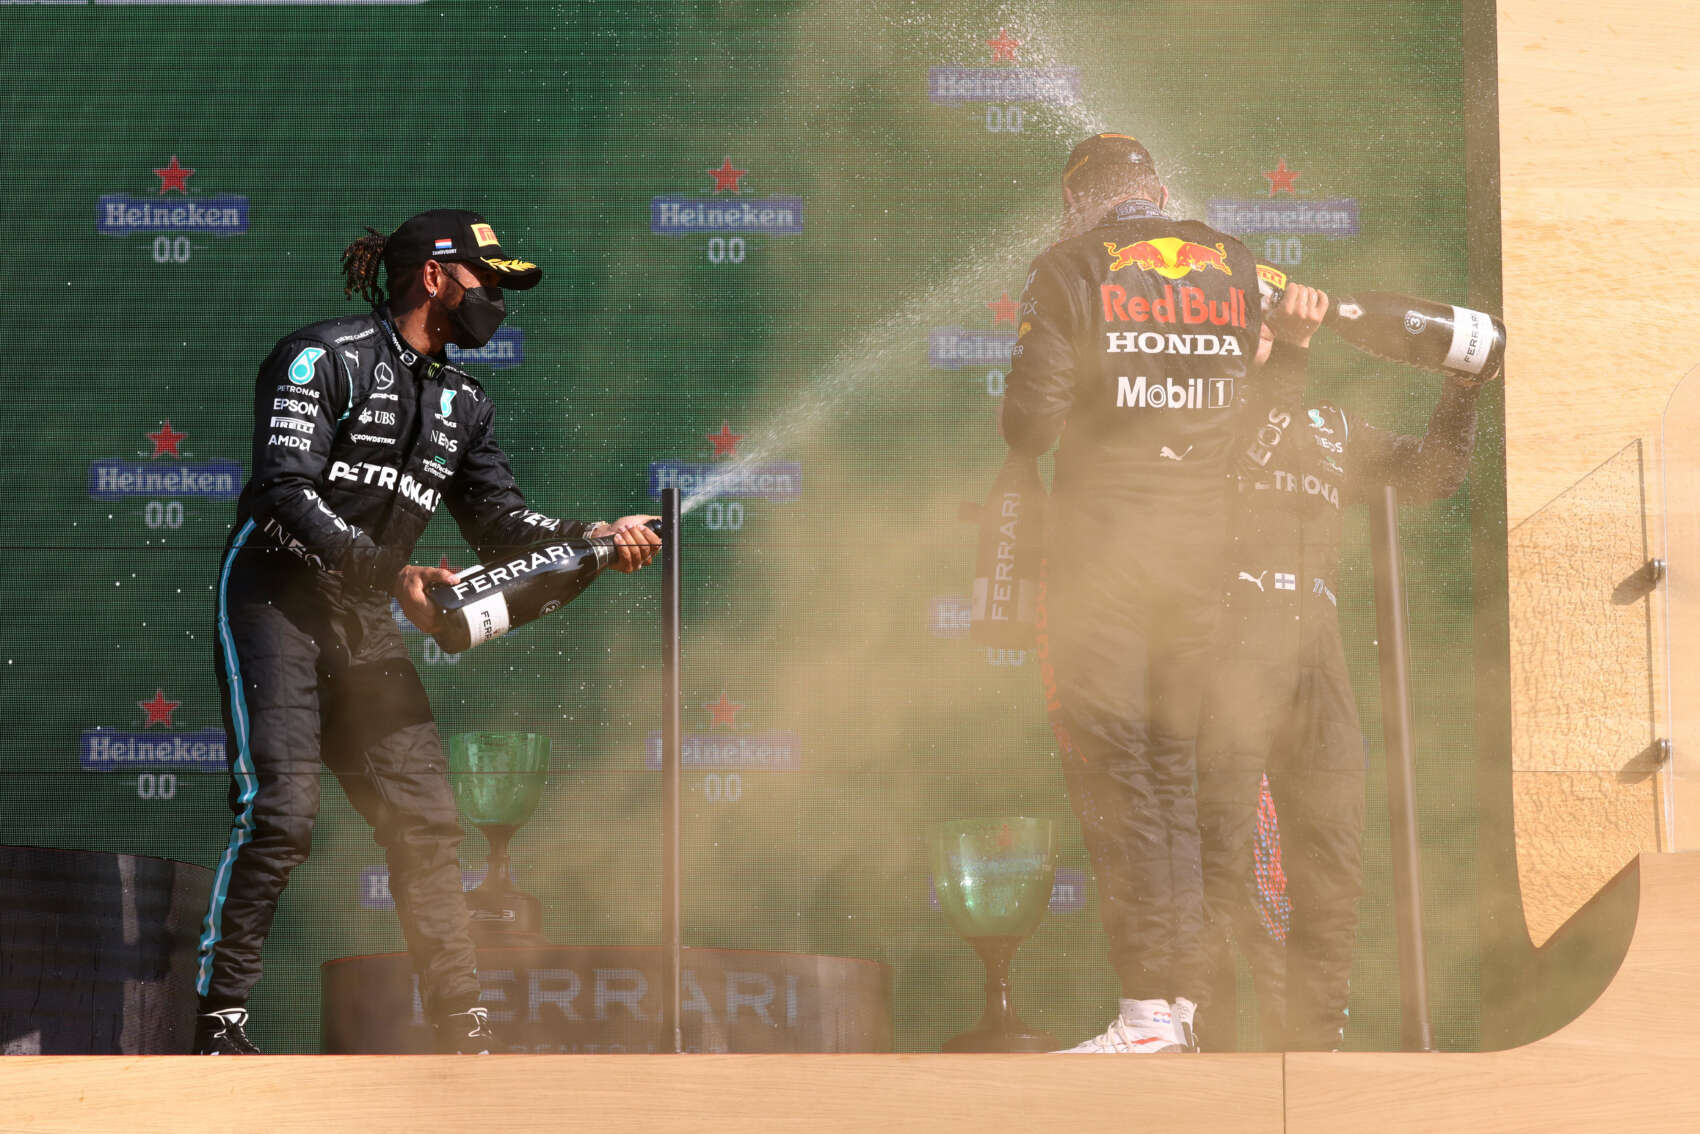 Lewis Hamilton, Max Verstappen